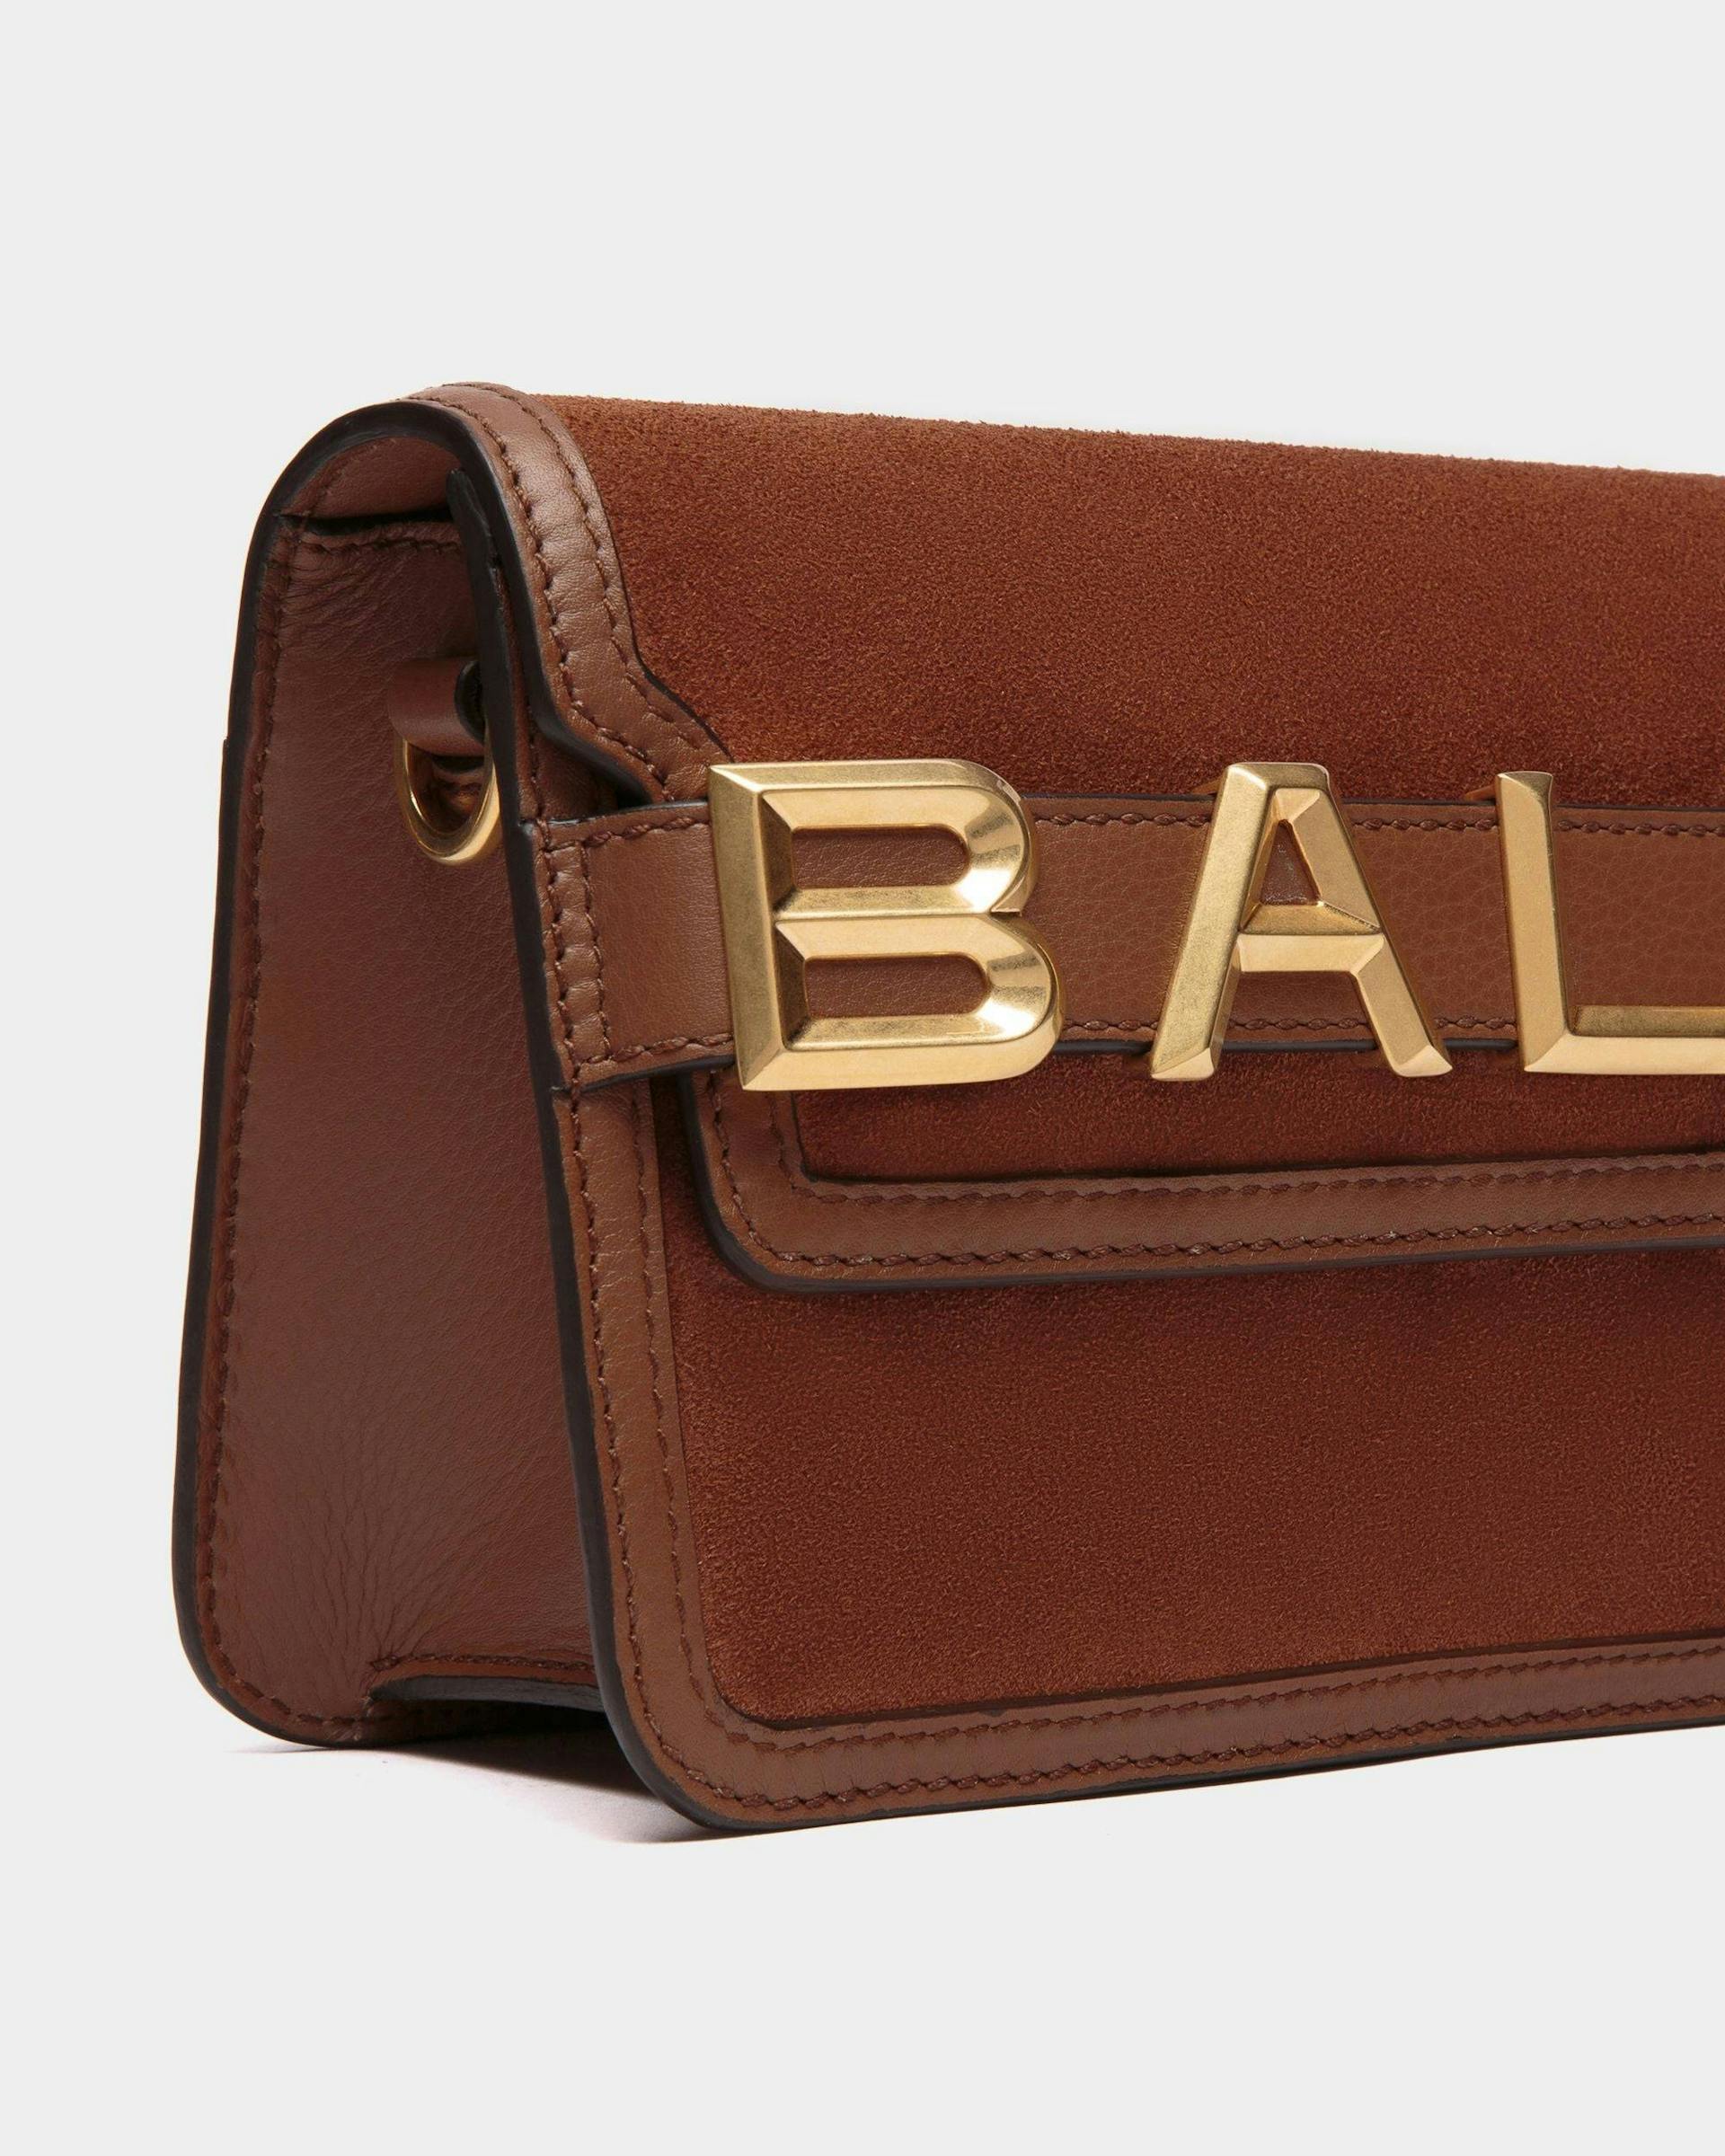 Women's Bally Spell Crossbody Bag in Brown Suede | Bally | Still Life Detail